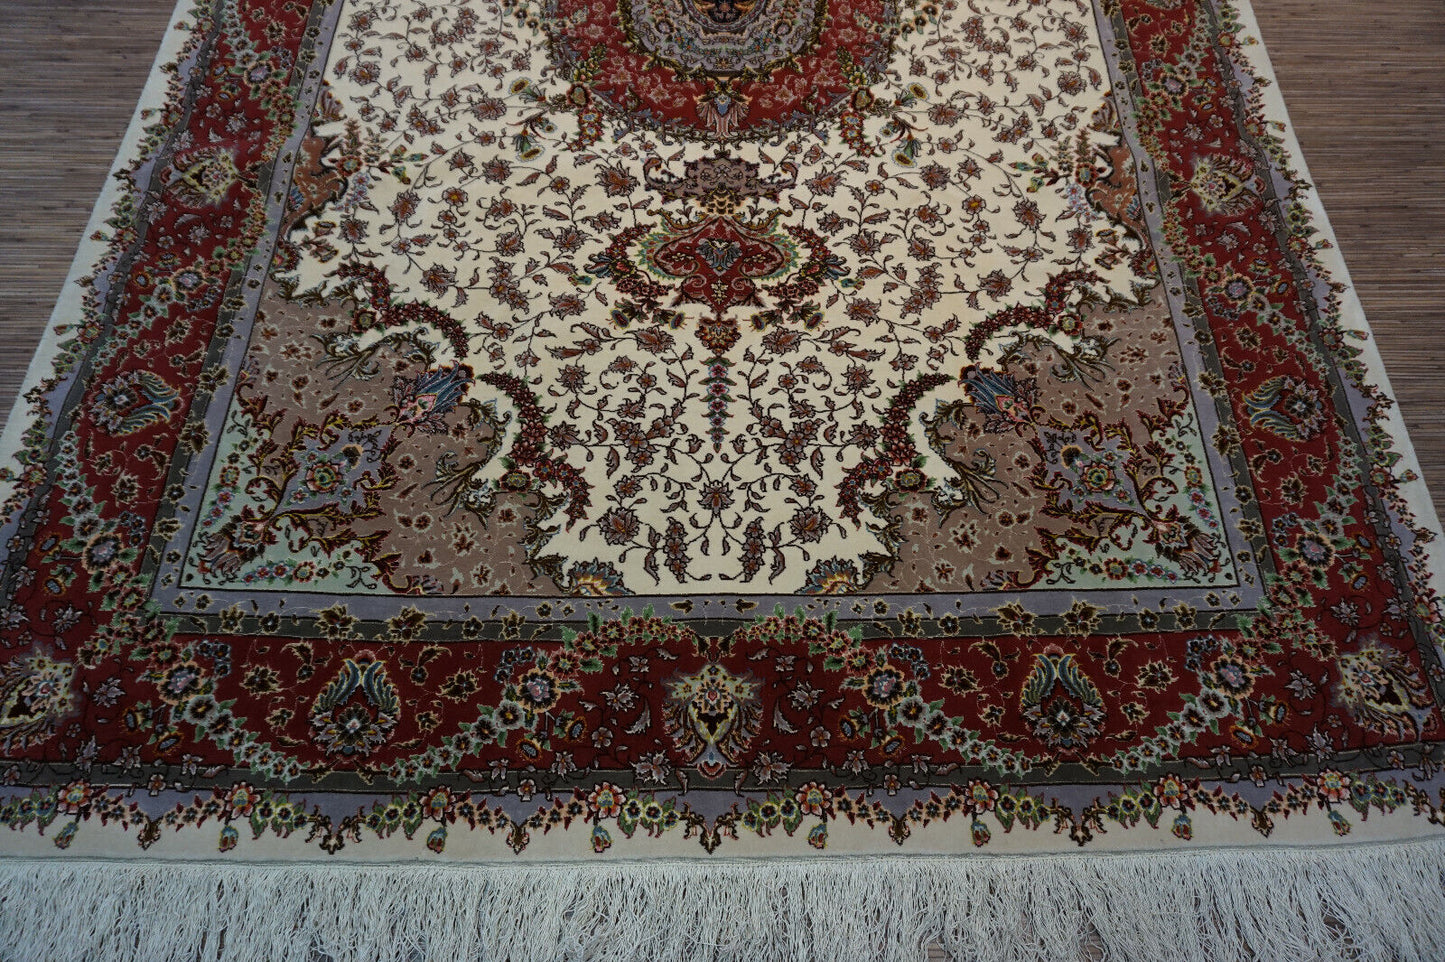 Overhead shot of the Persian Tabriz rug demonstrating its opulent silk blend